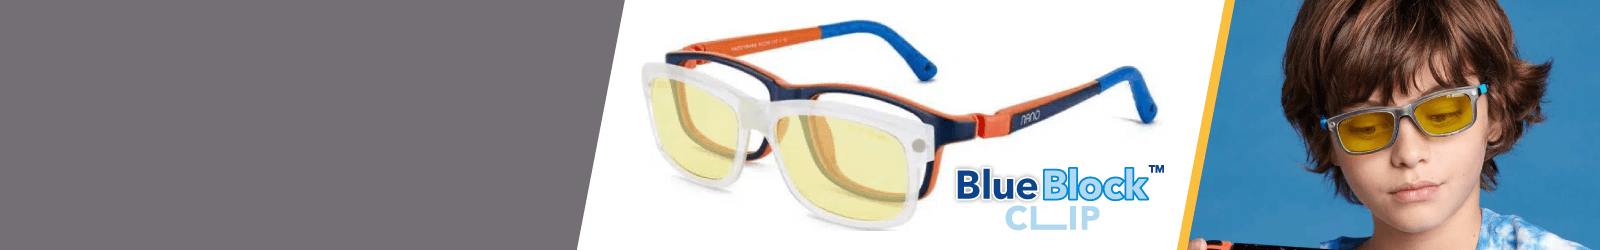 Peach Nano Blue Block Clip Kids Glasses